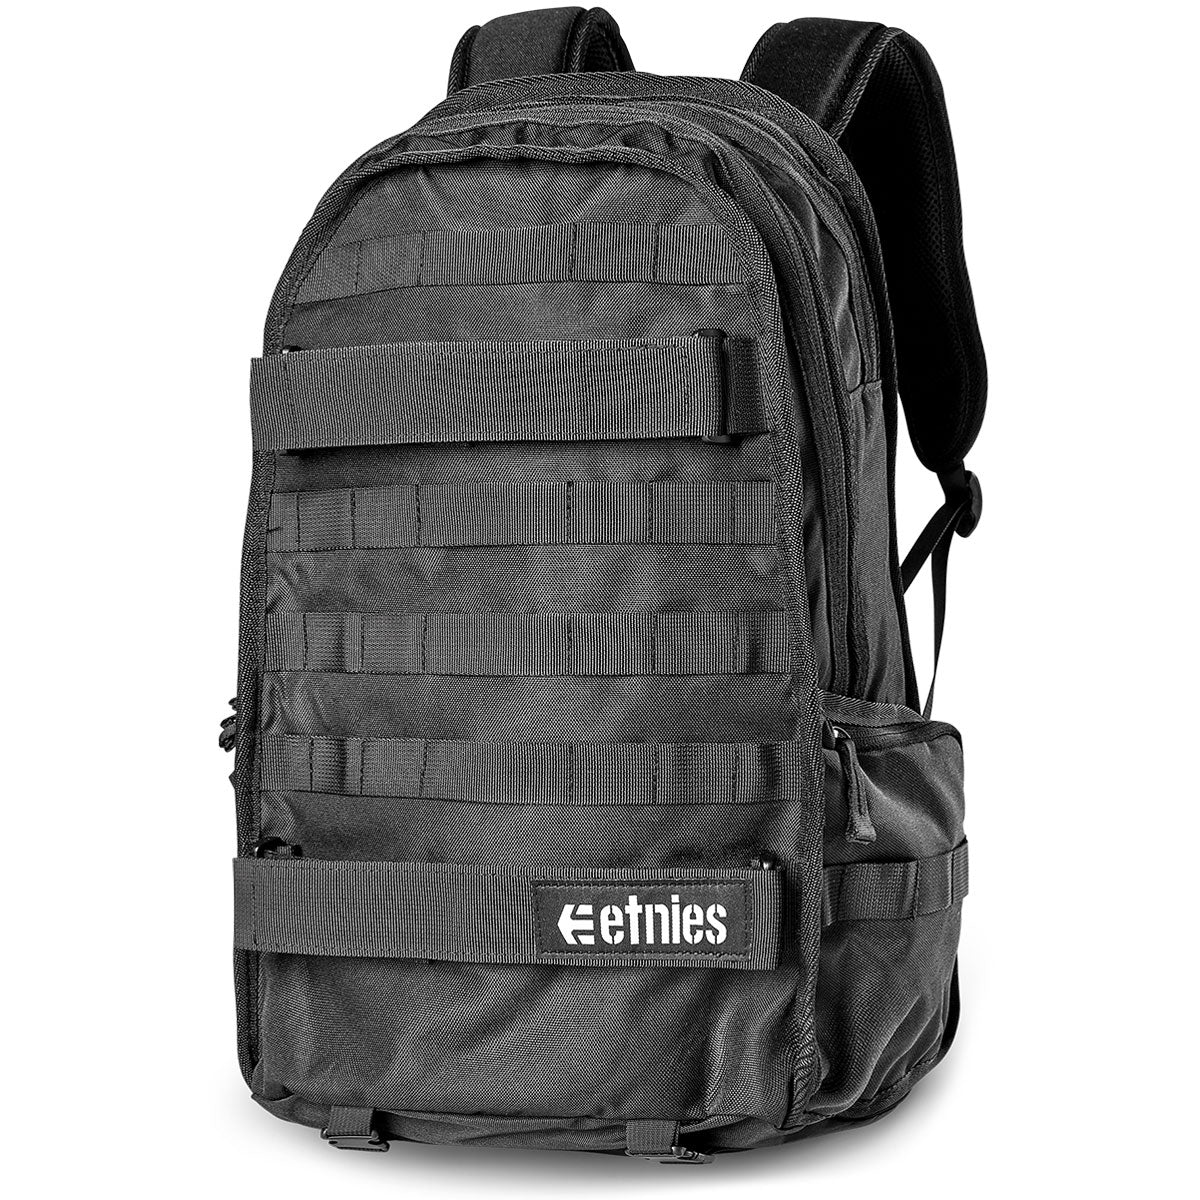 Etnies Marana Backpack - Black image 1